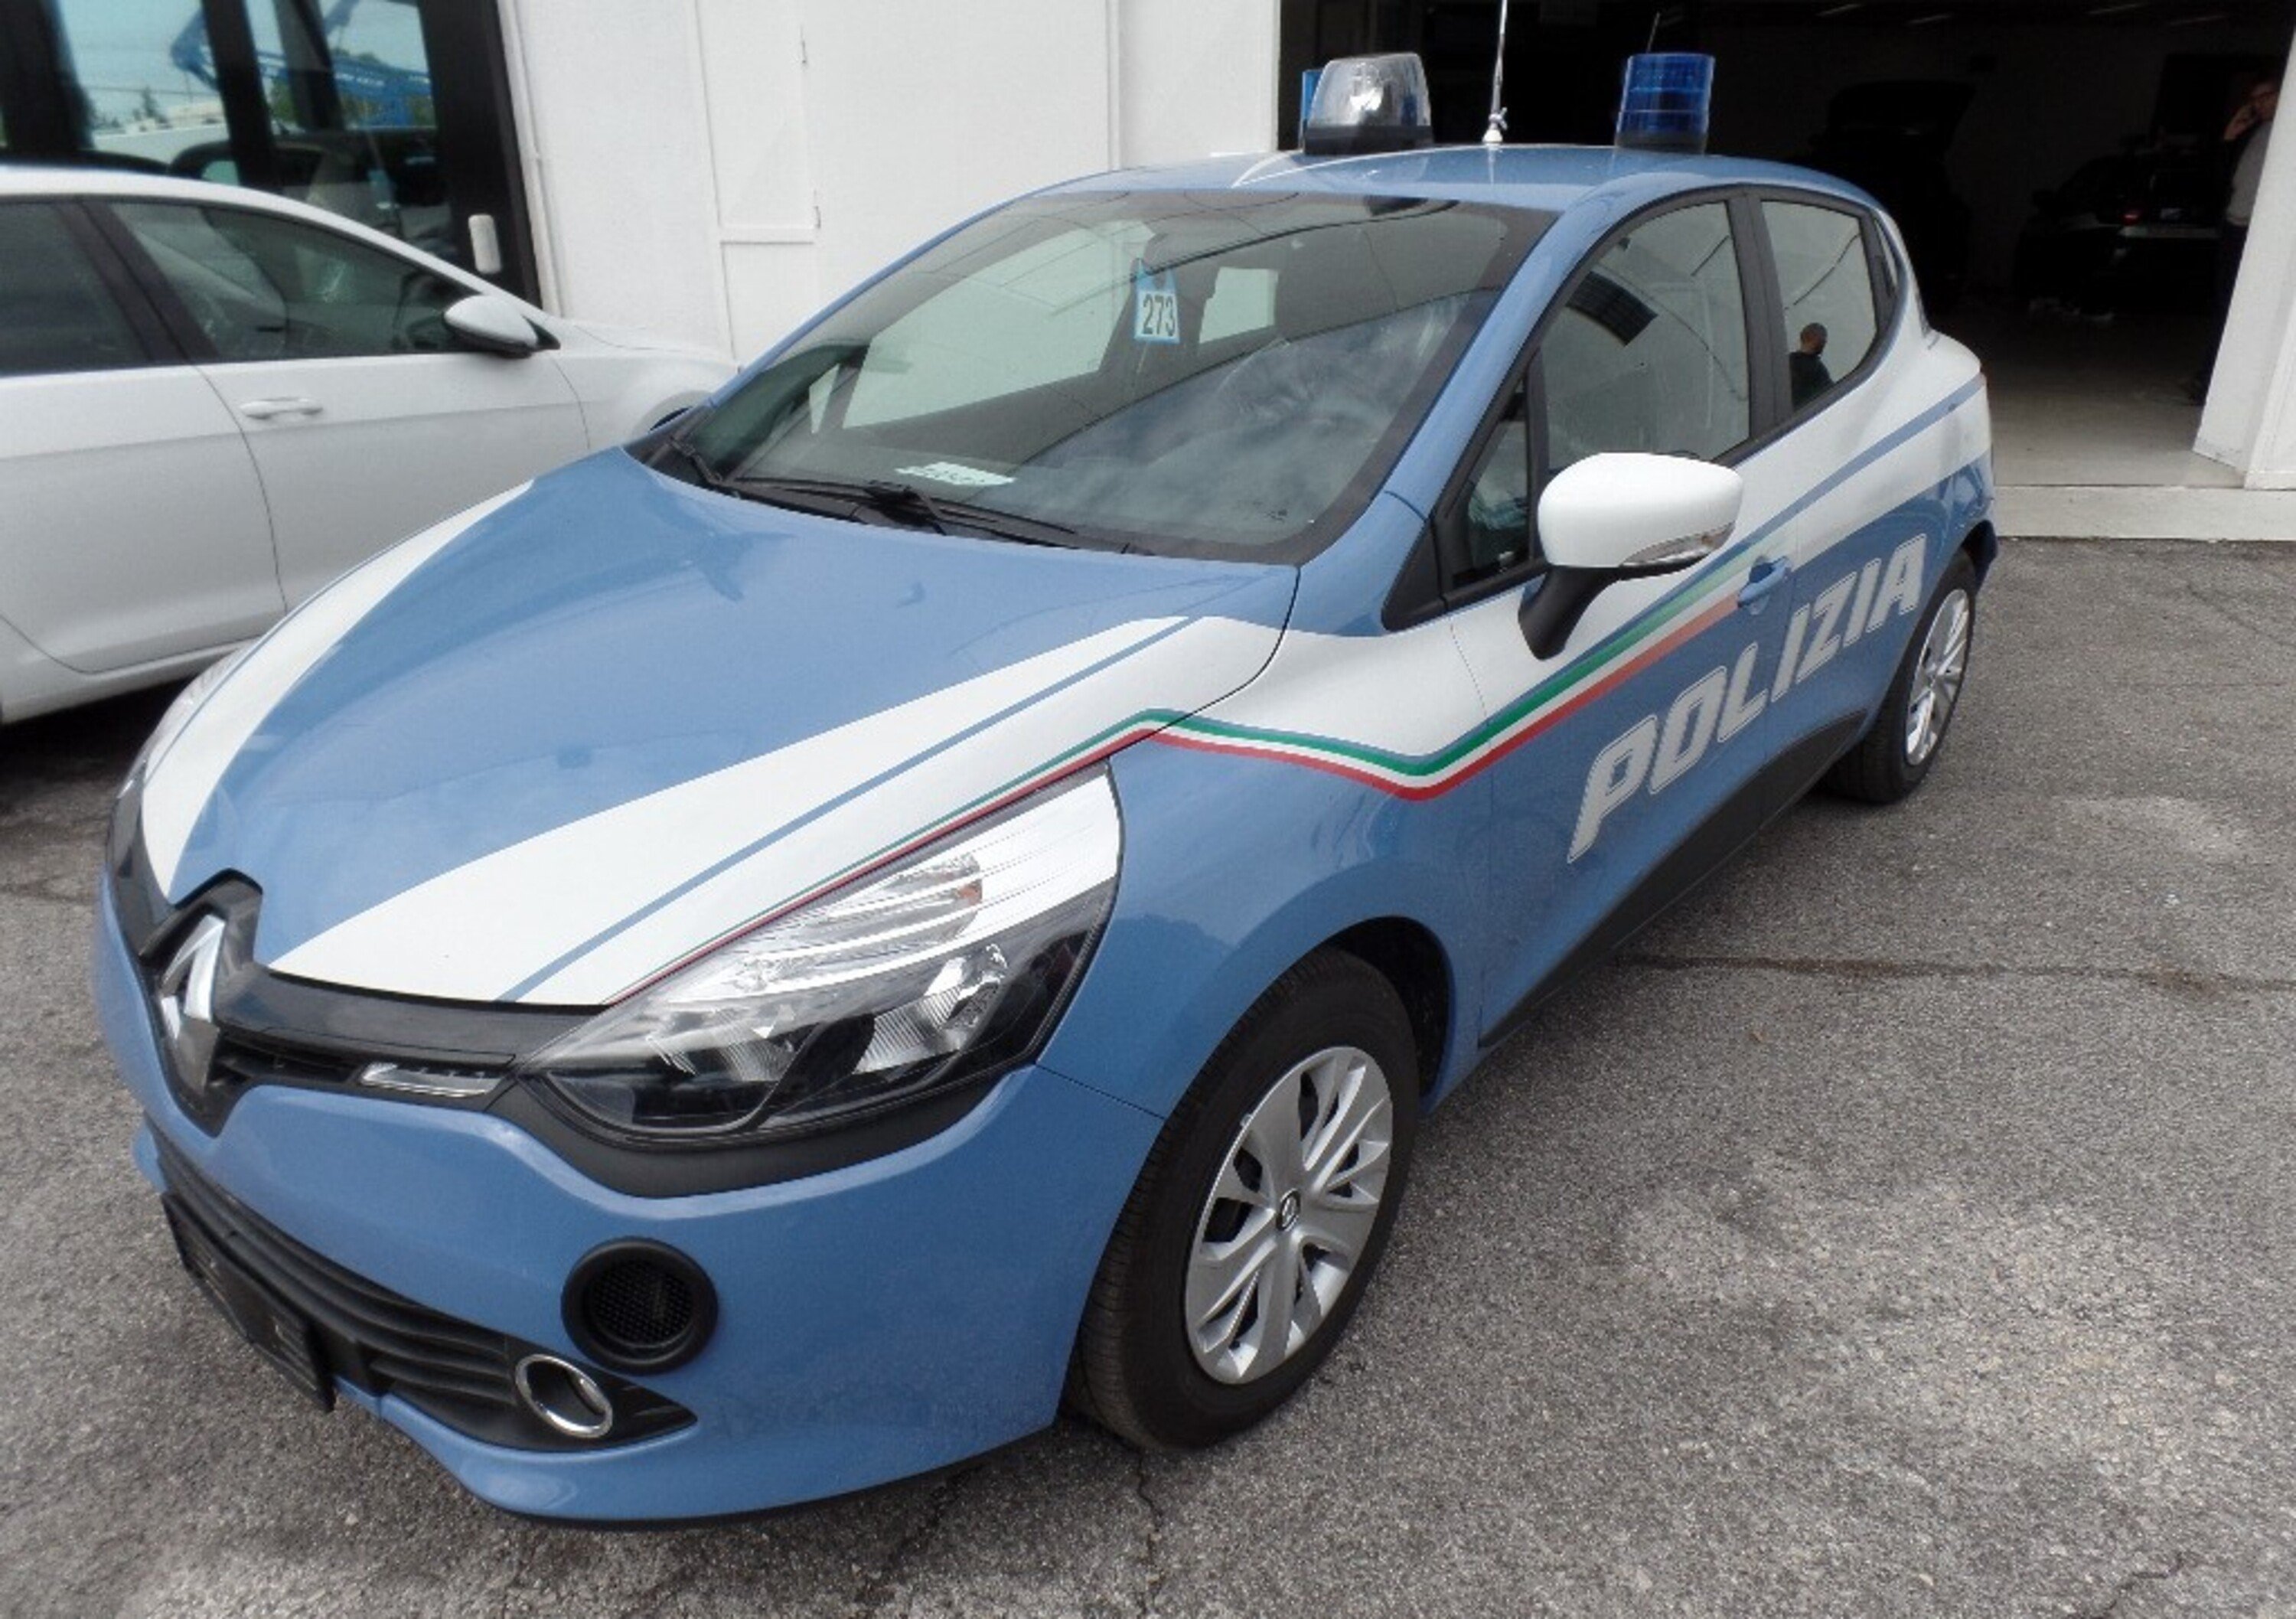 La Renault Clio si arruola in Polizia